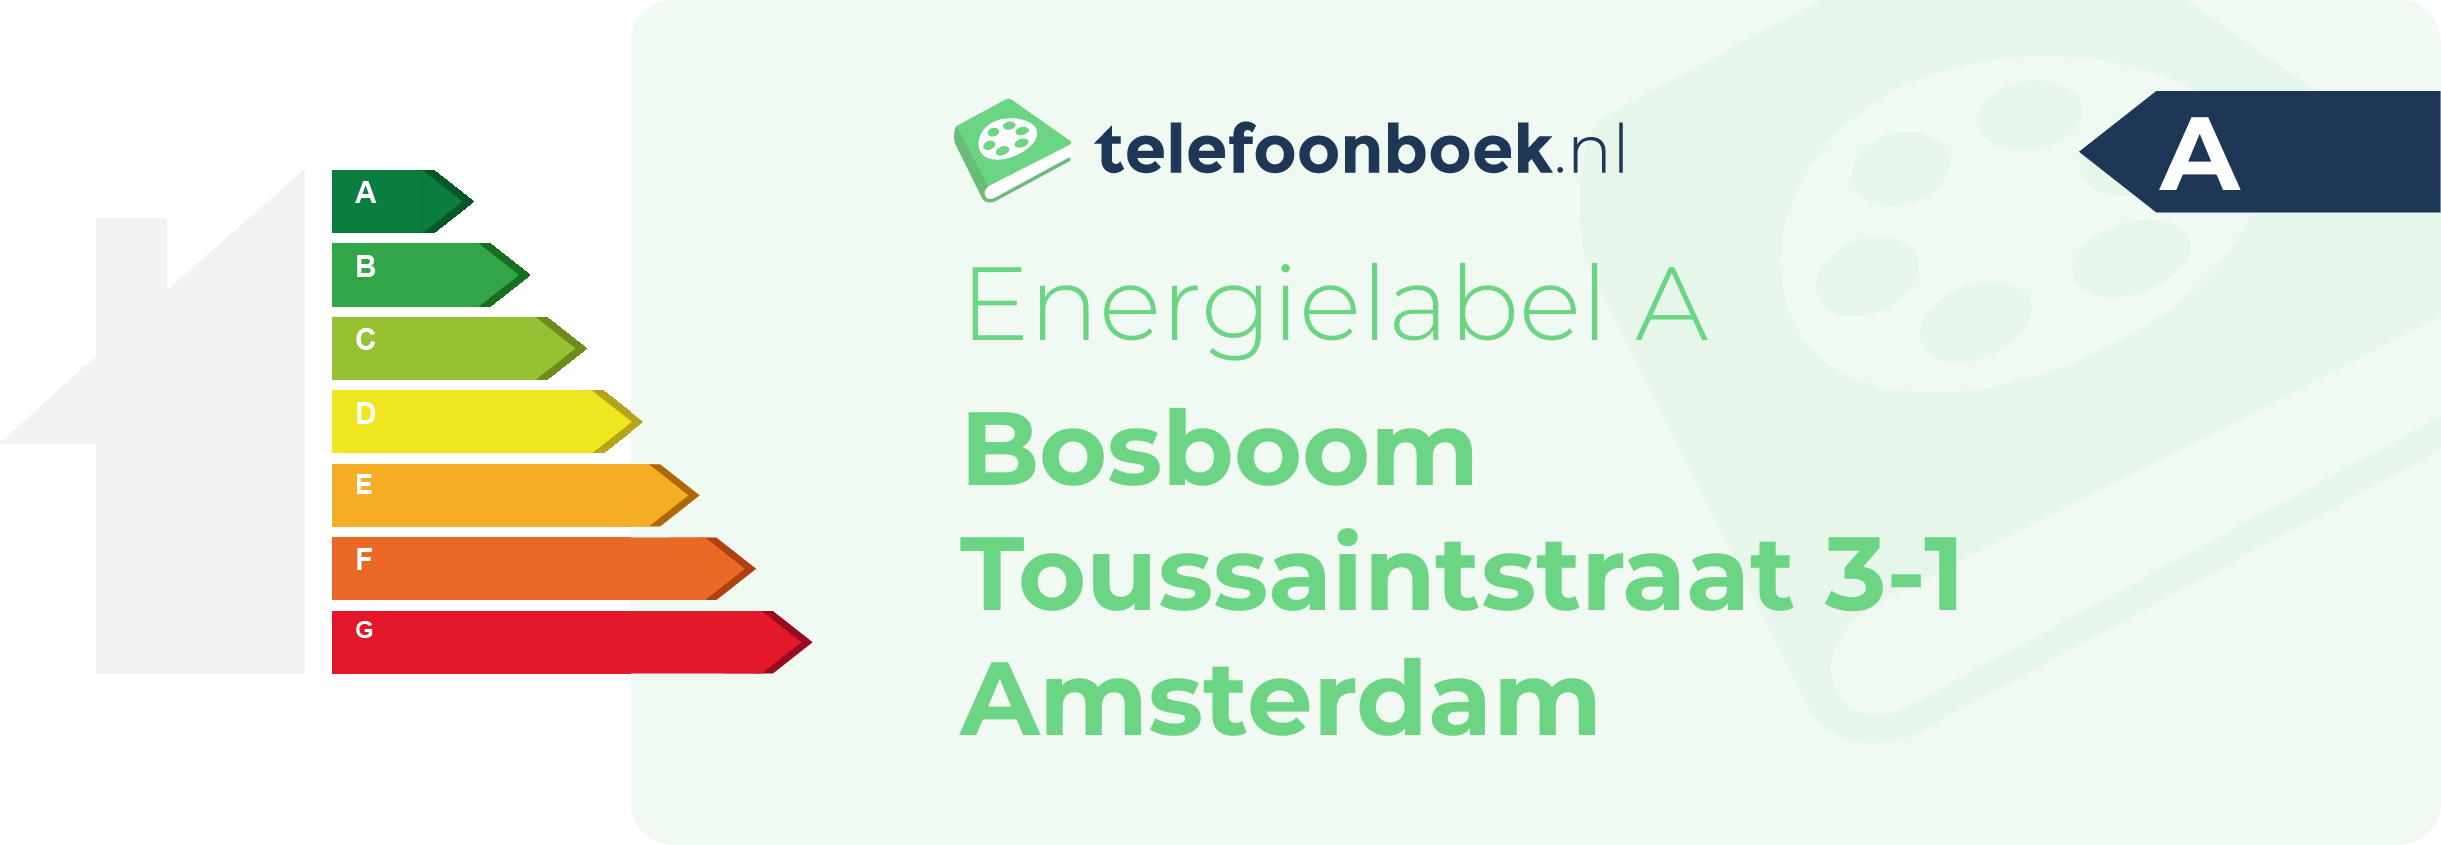 Energielabel Bosboom Toussaintstraat 3-1 Amsterdam